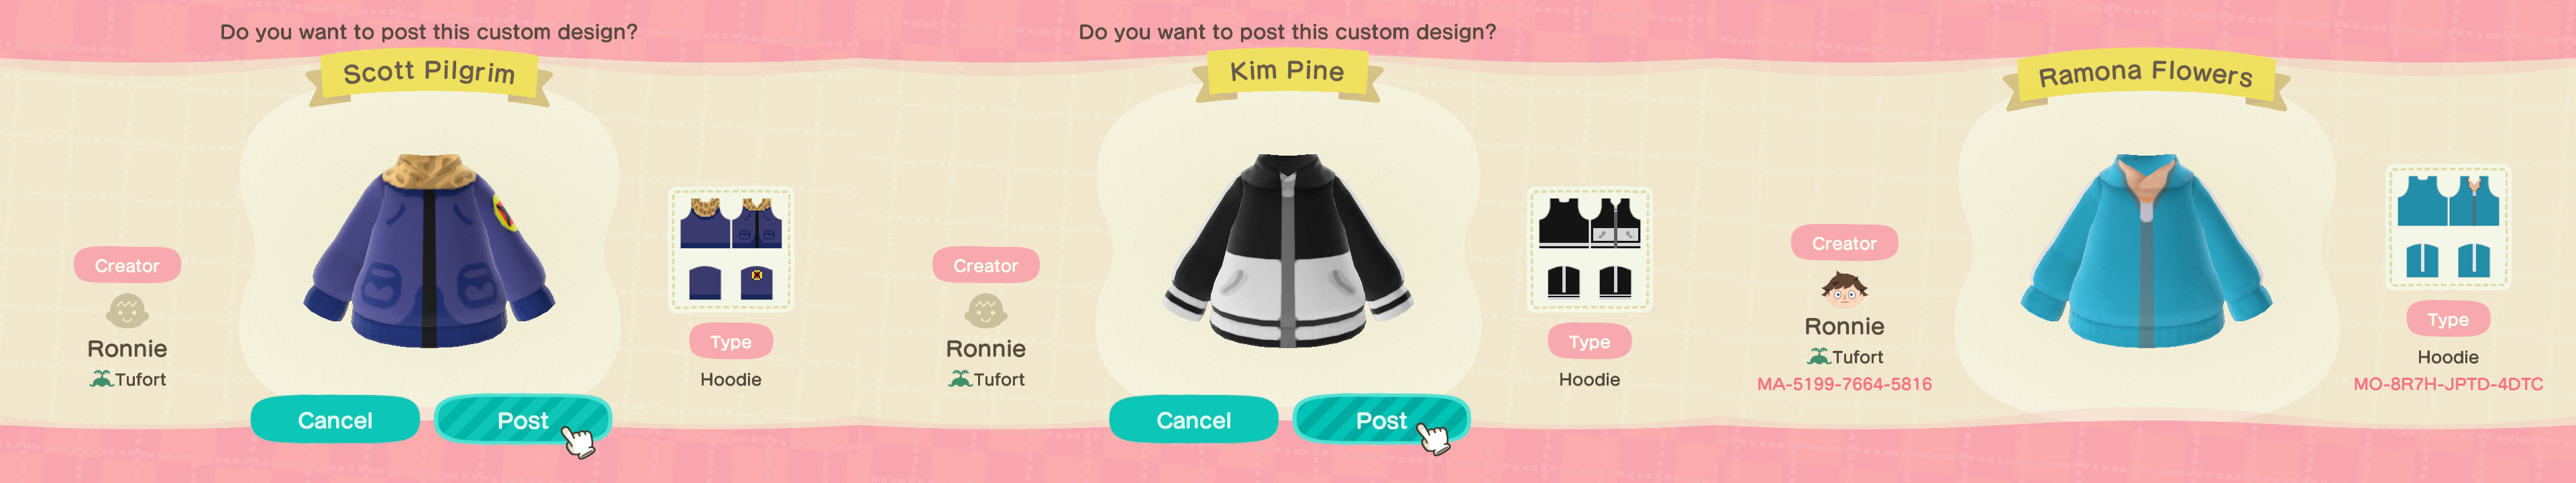 Animal Crossing Scott Pilgrim Themed Outfits